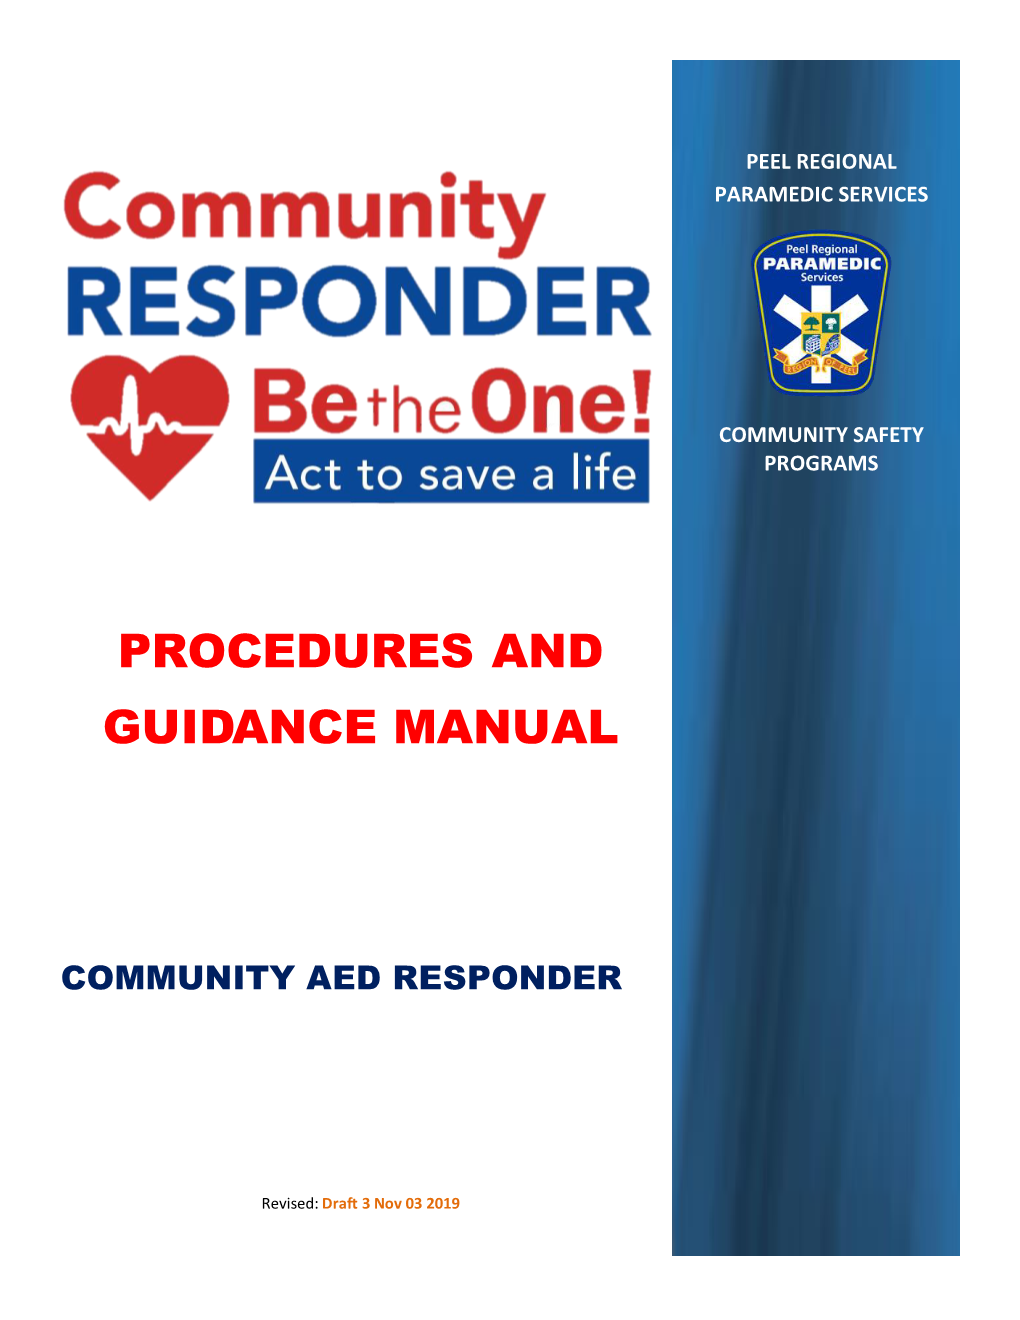 Community Responder Program Manual